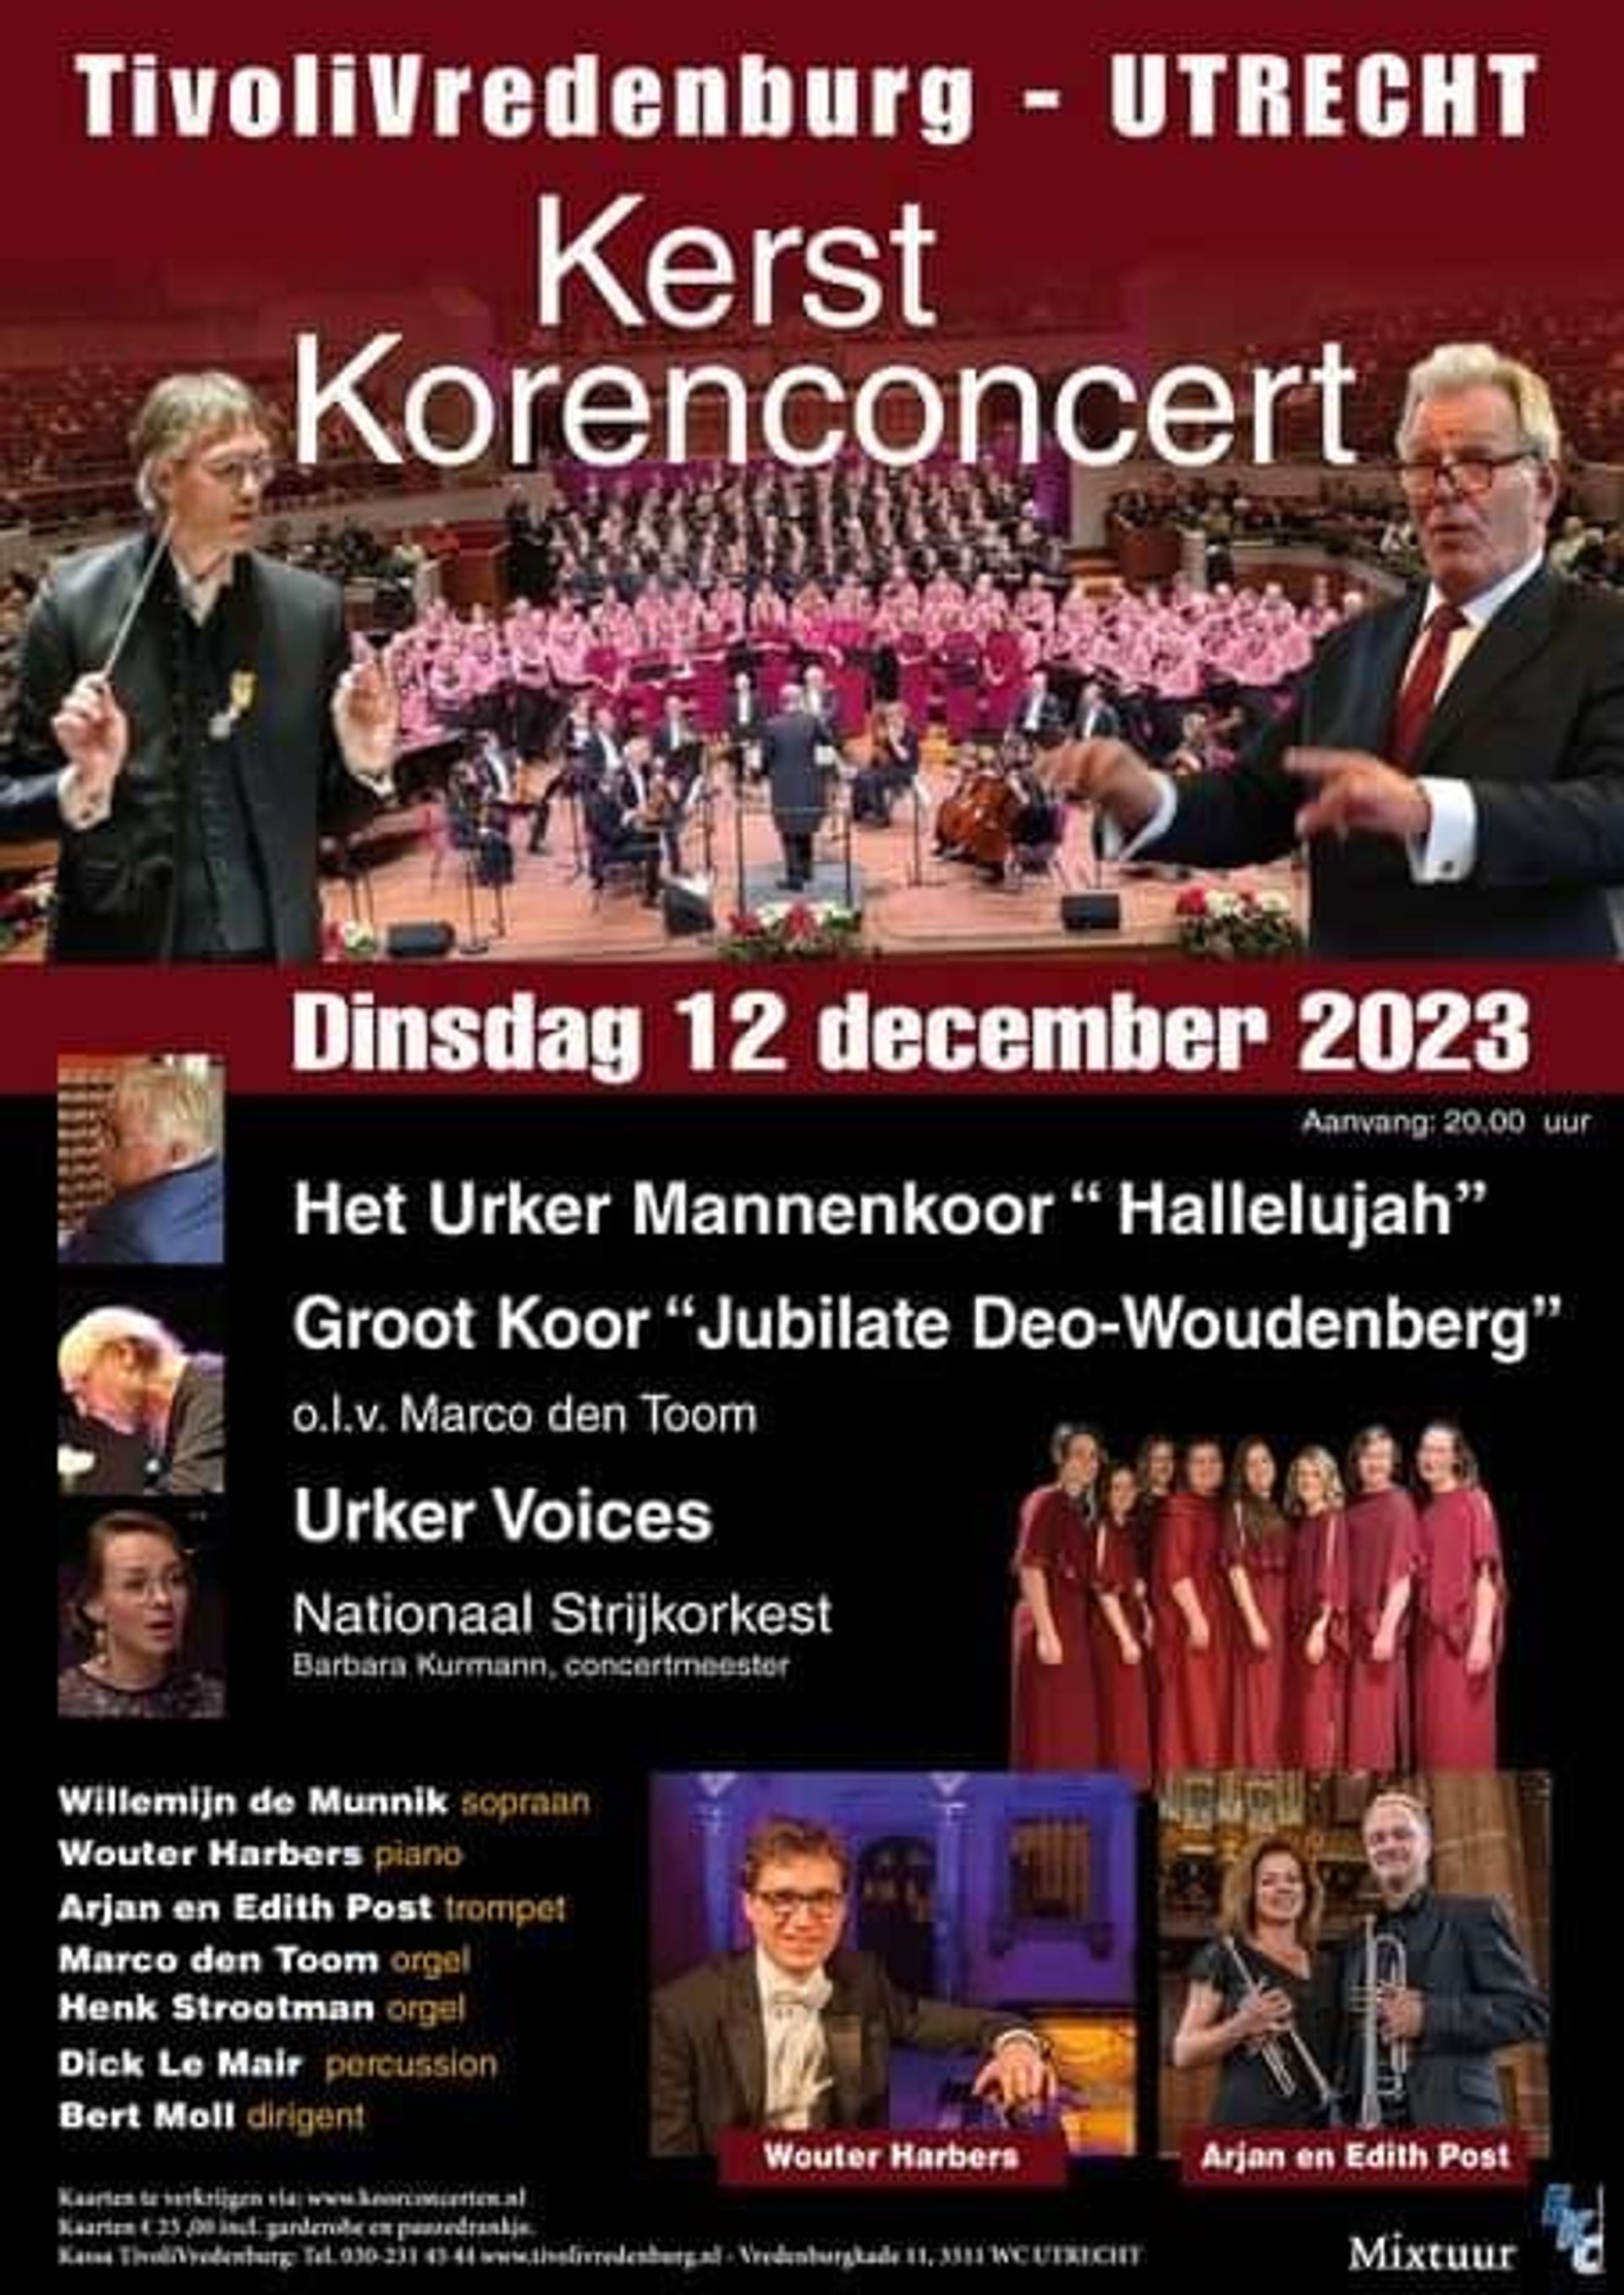 Utrecht Kerstkorenconcert 2023 Tivoli